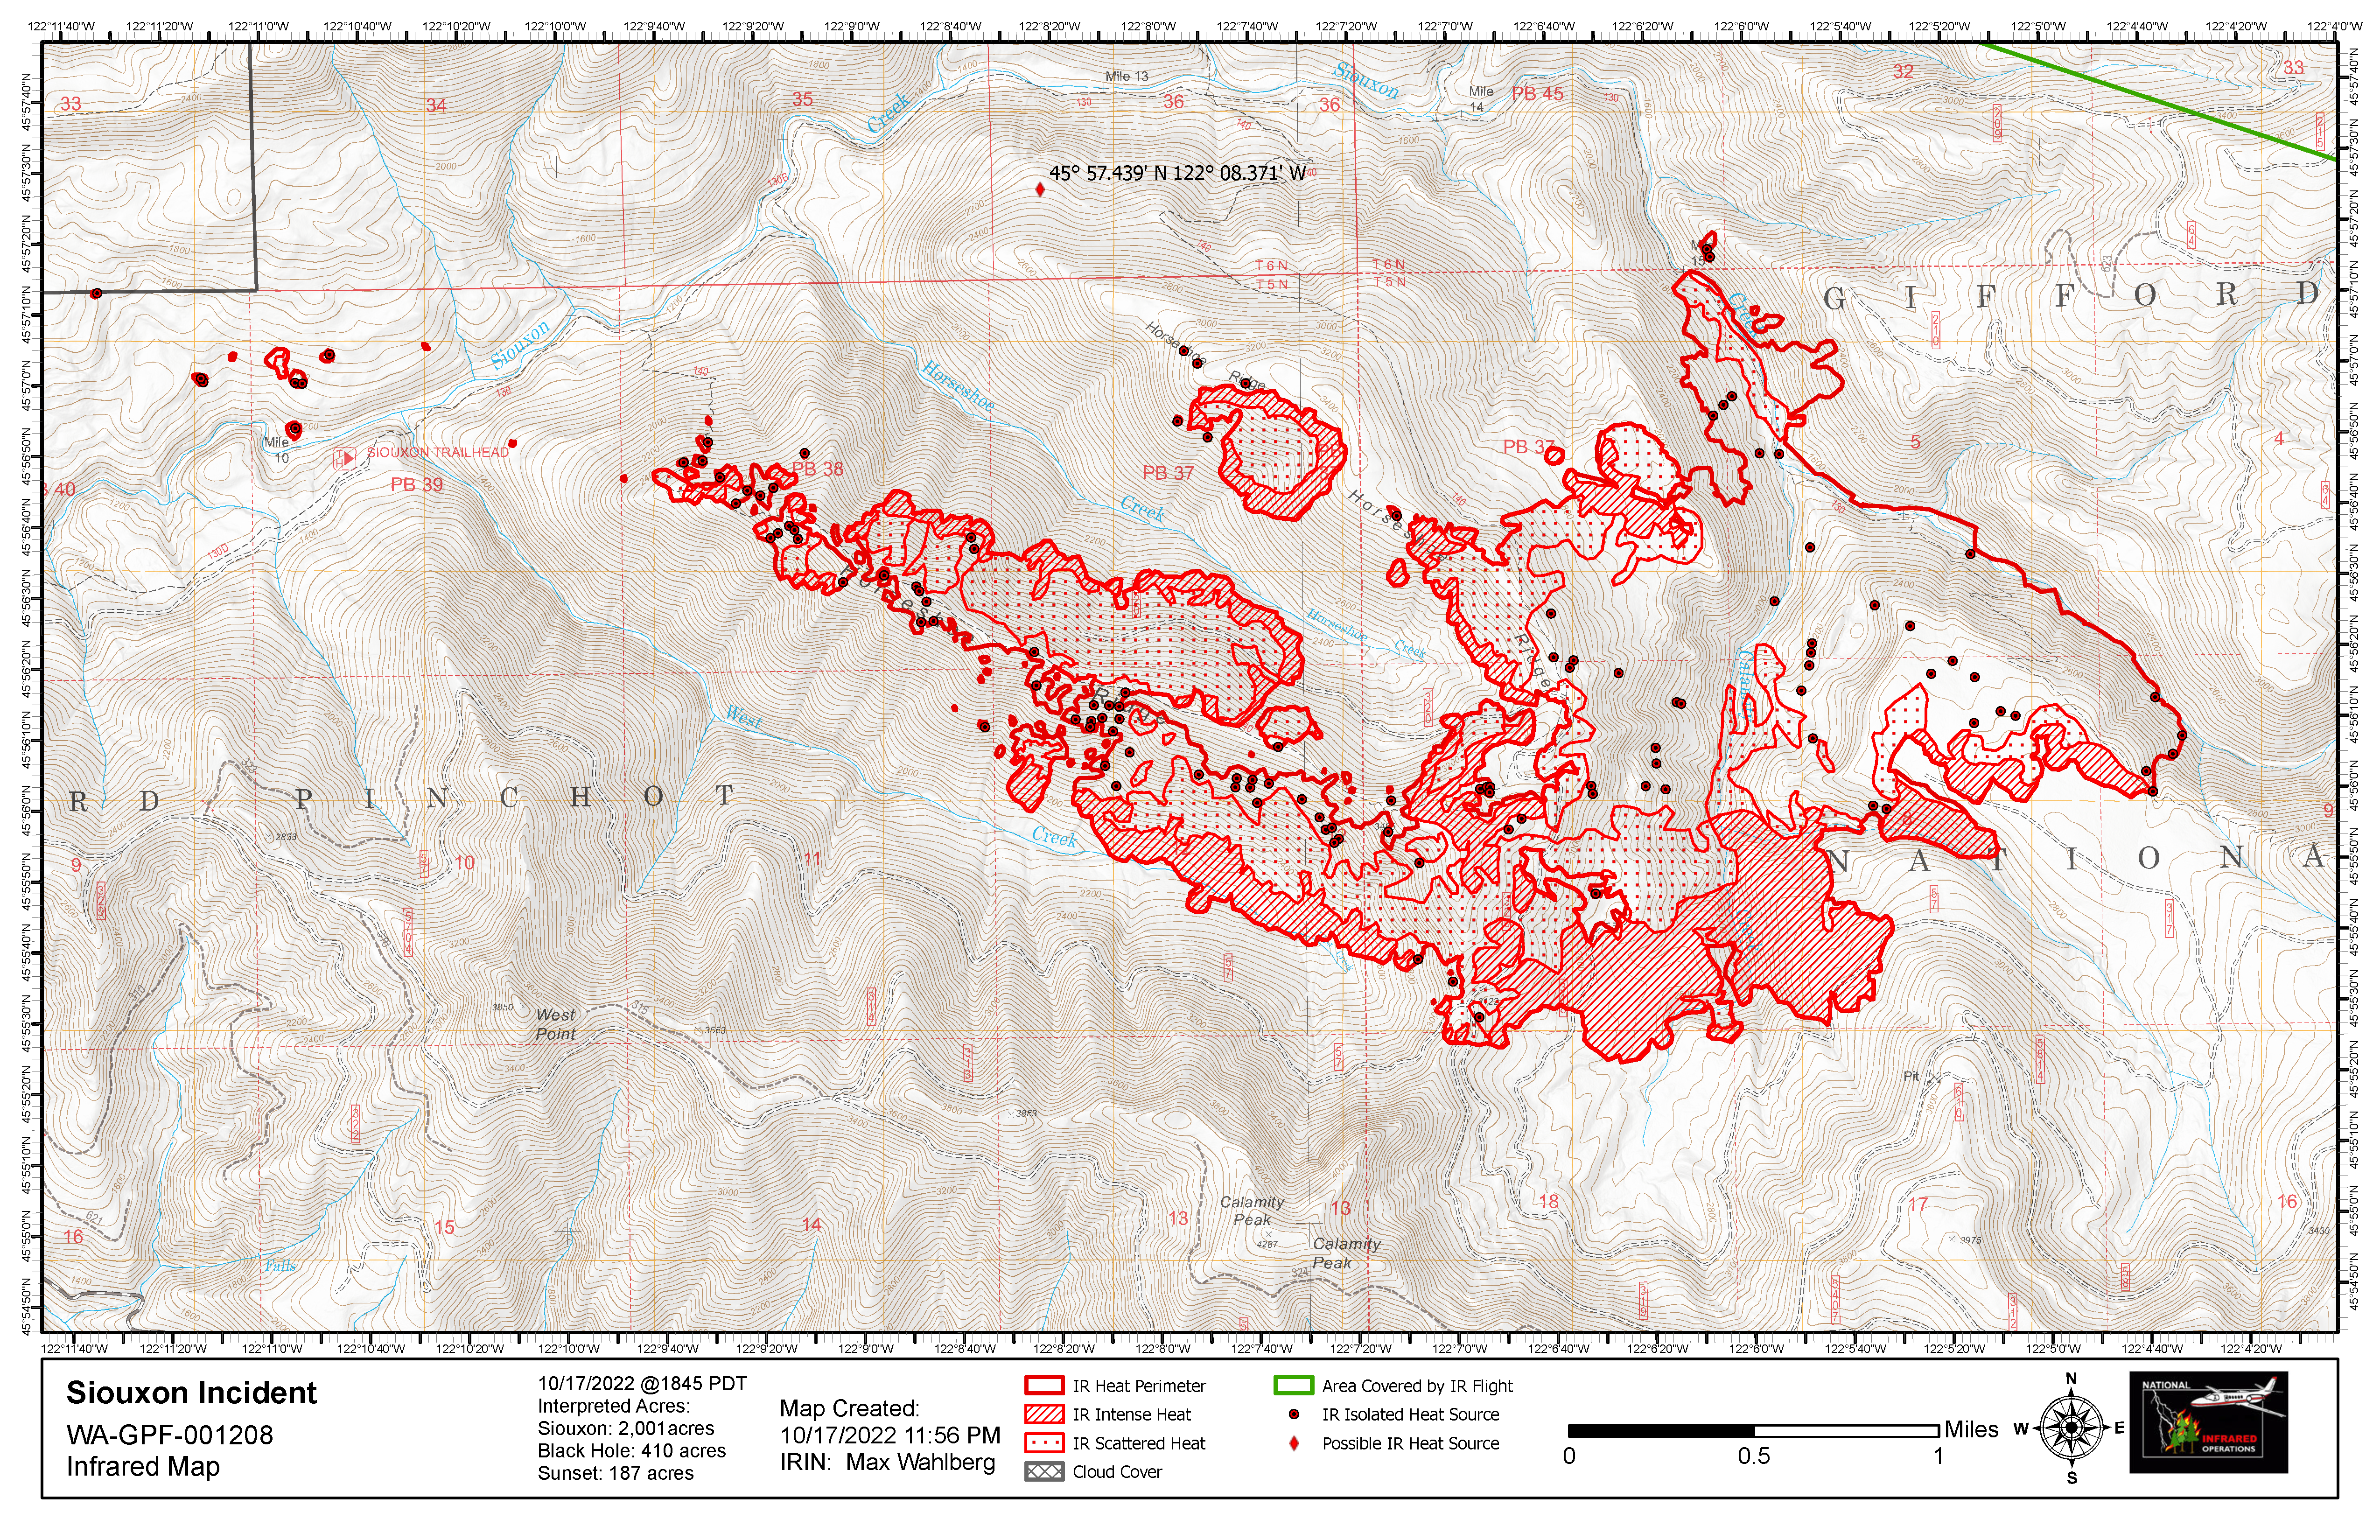 Siouxon Fire infrared map, October 18